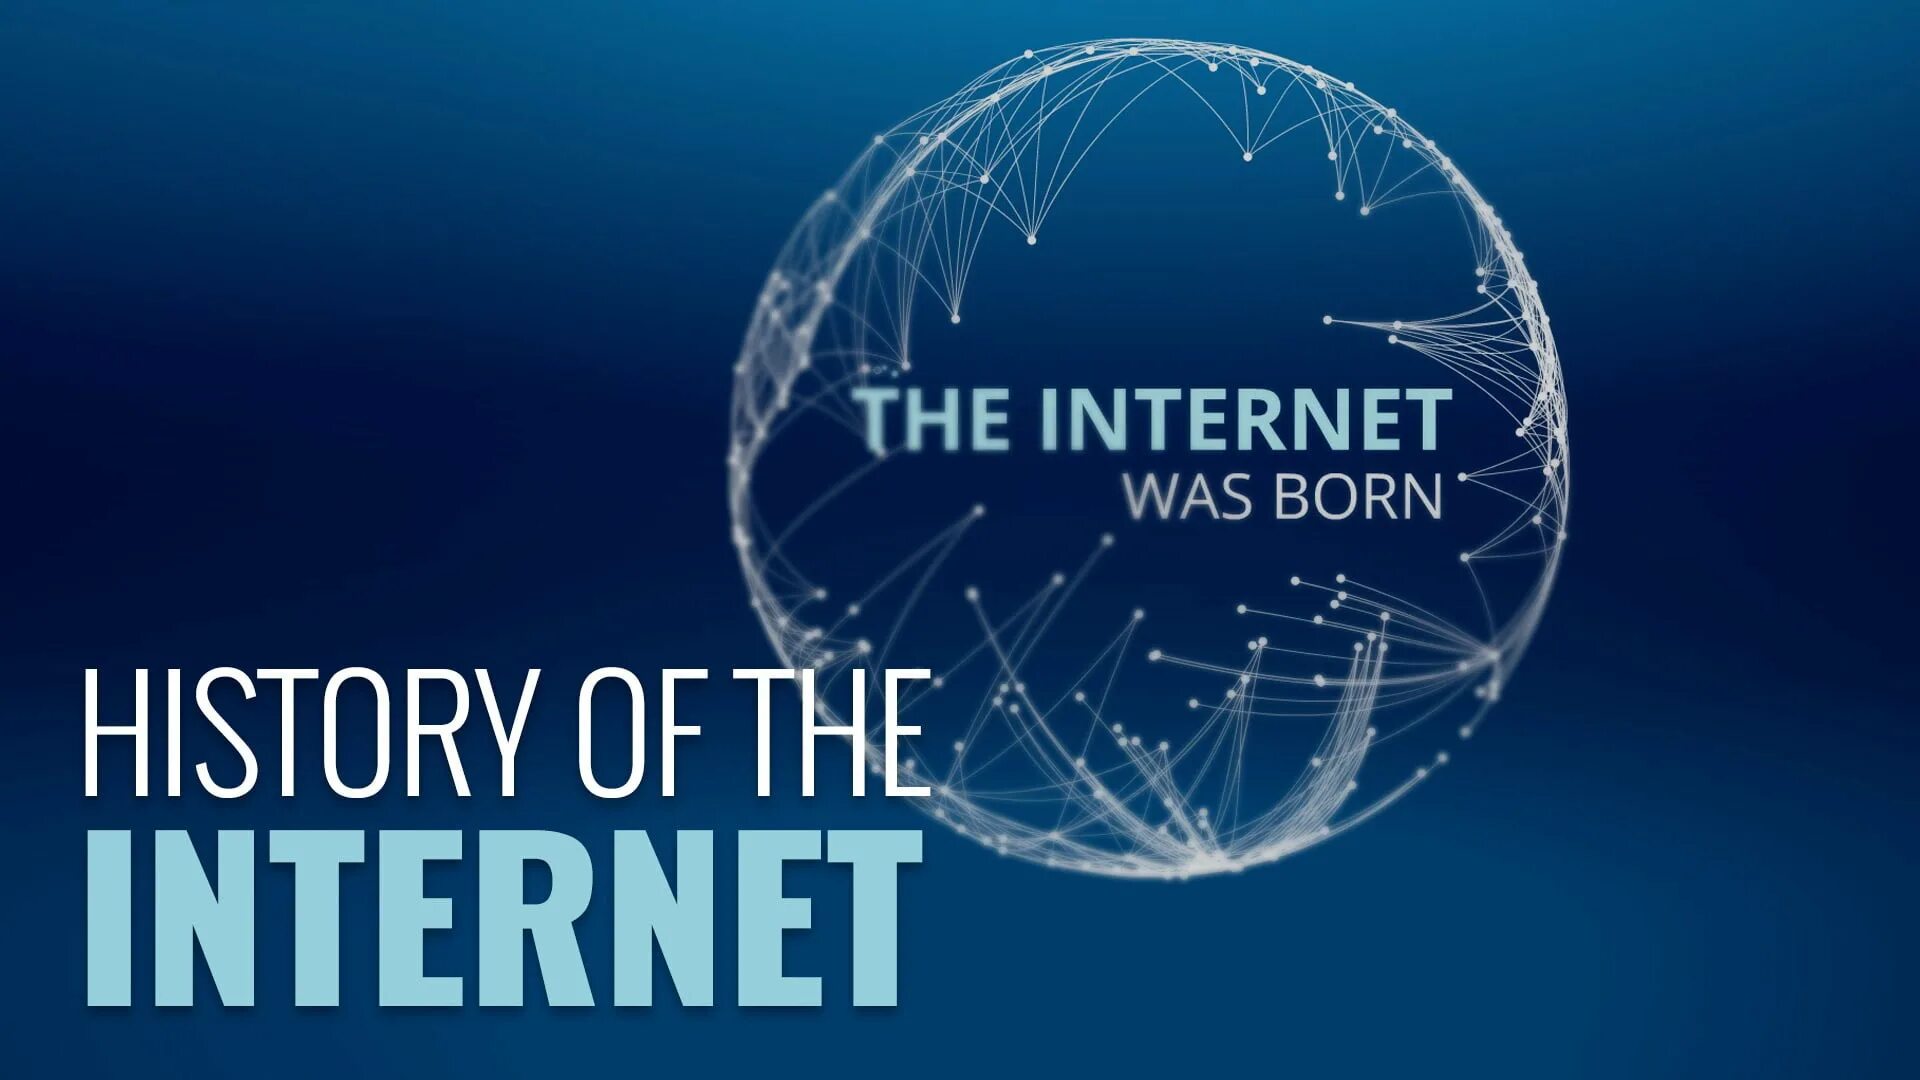 Интернет истории из жизни. Internet History. Invention of Internet. The Internet. История создания интернета.